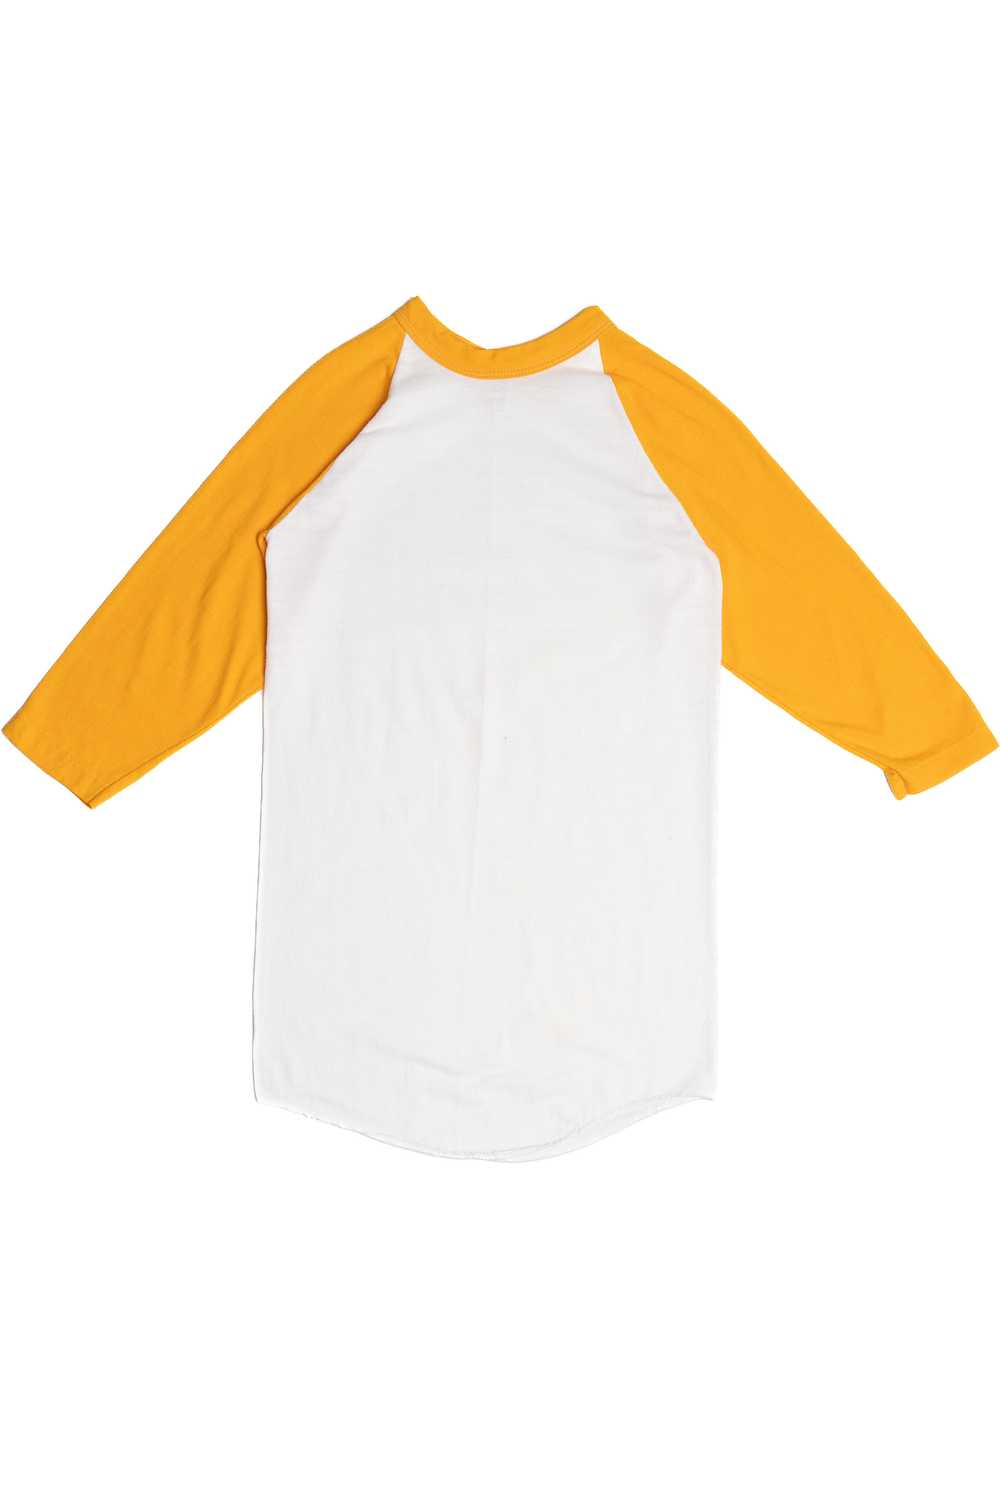 Vintage Yellow Blank Sportswear Raglan T-Shirt - image 1